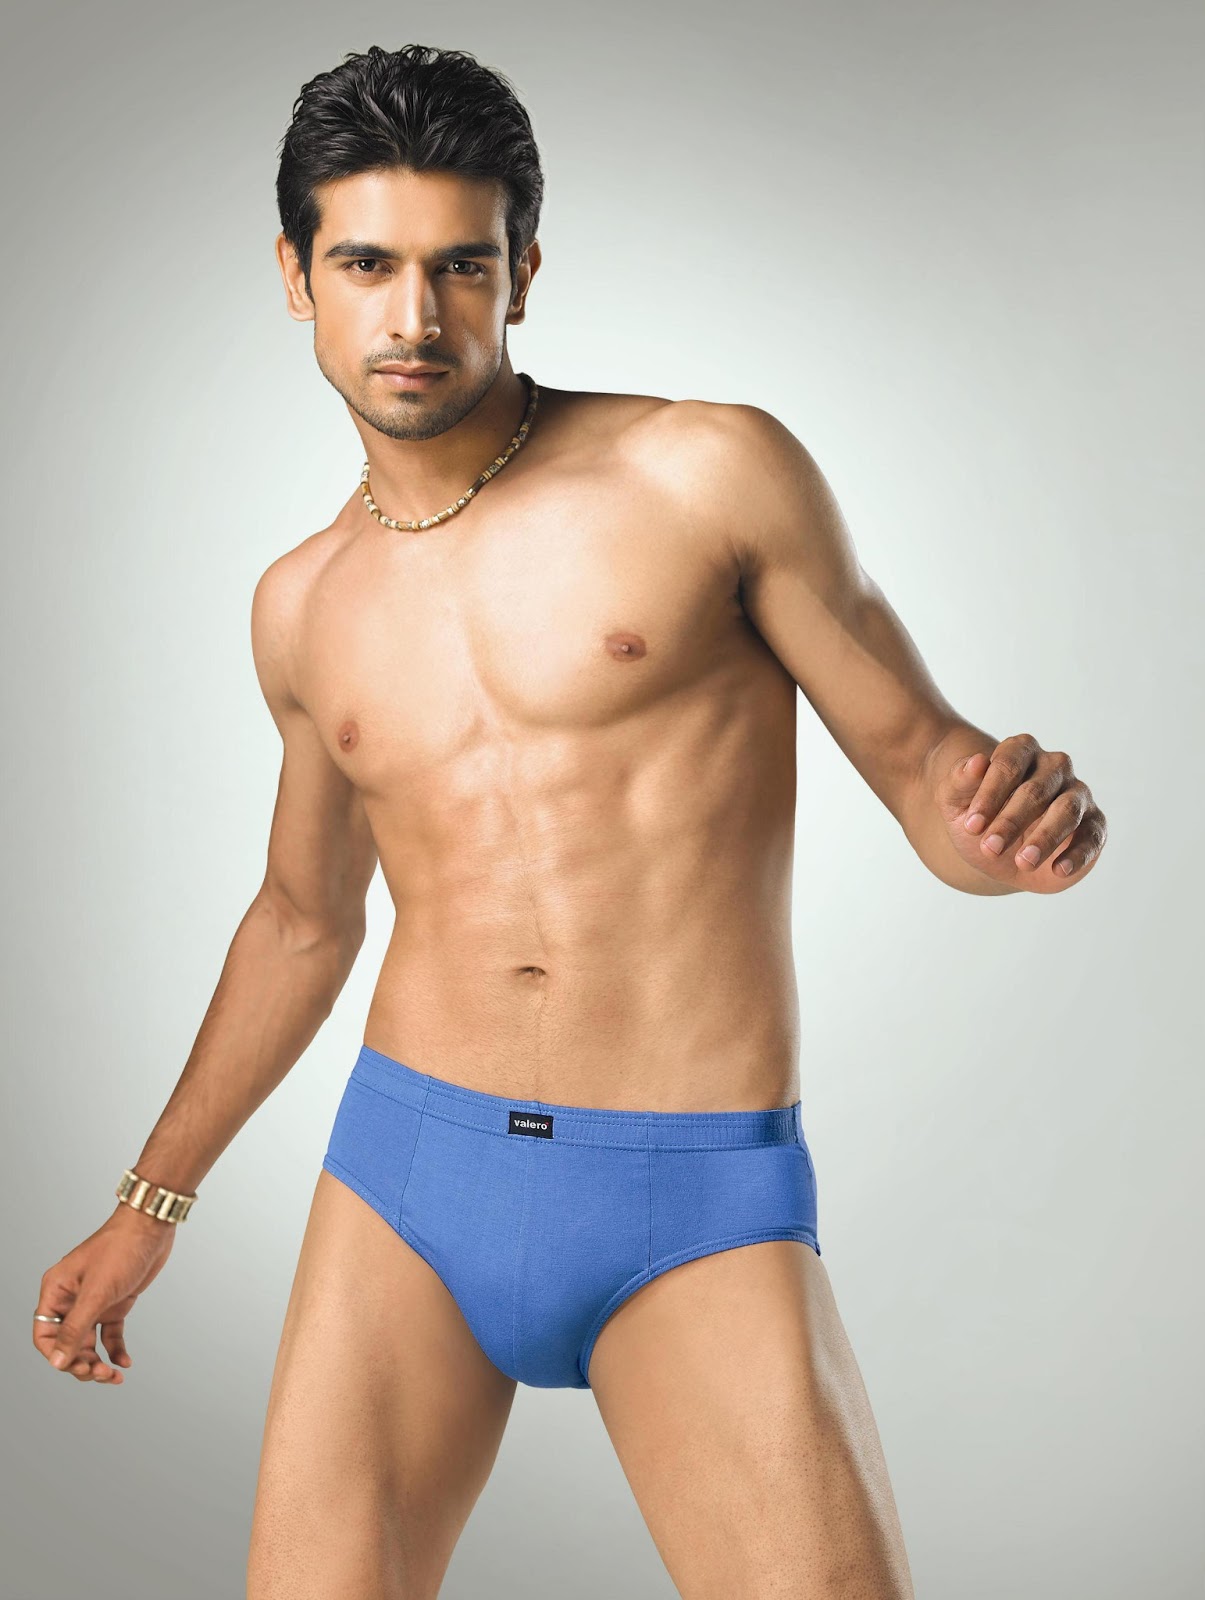 Male underwear ads in india